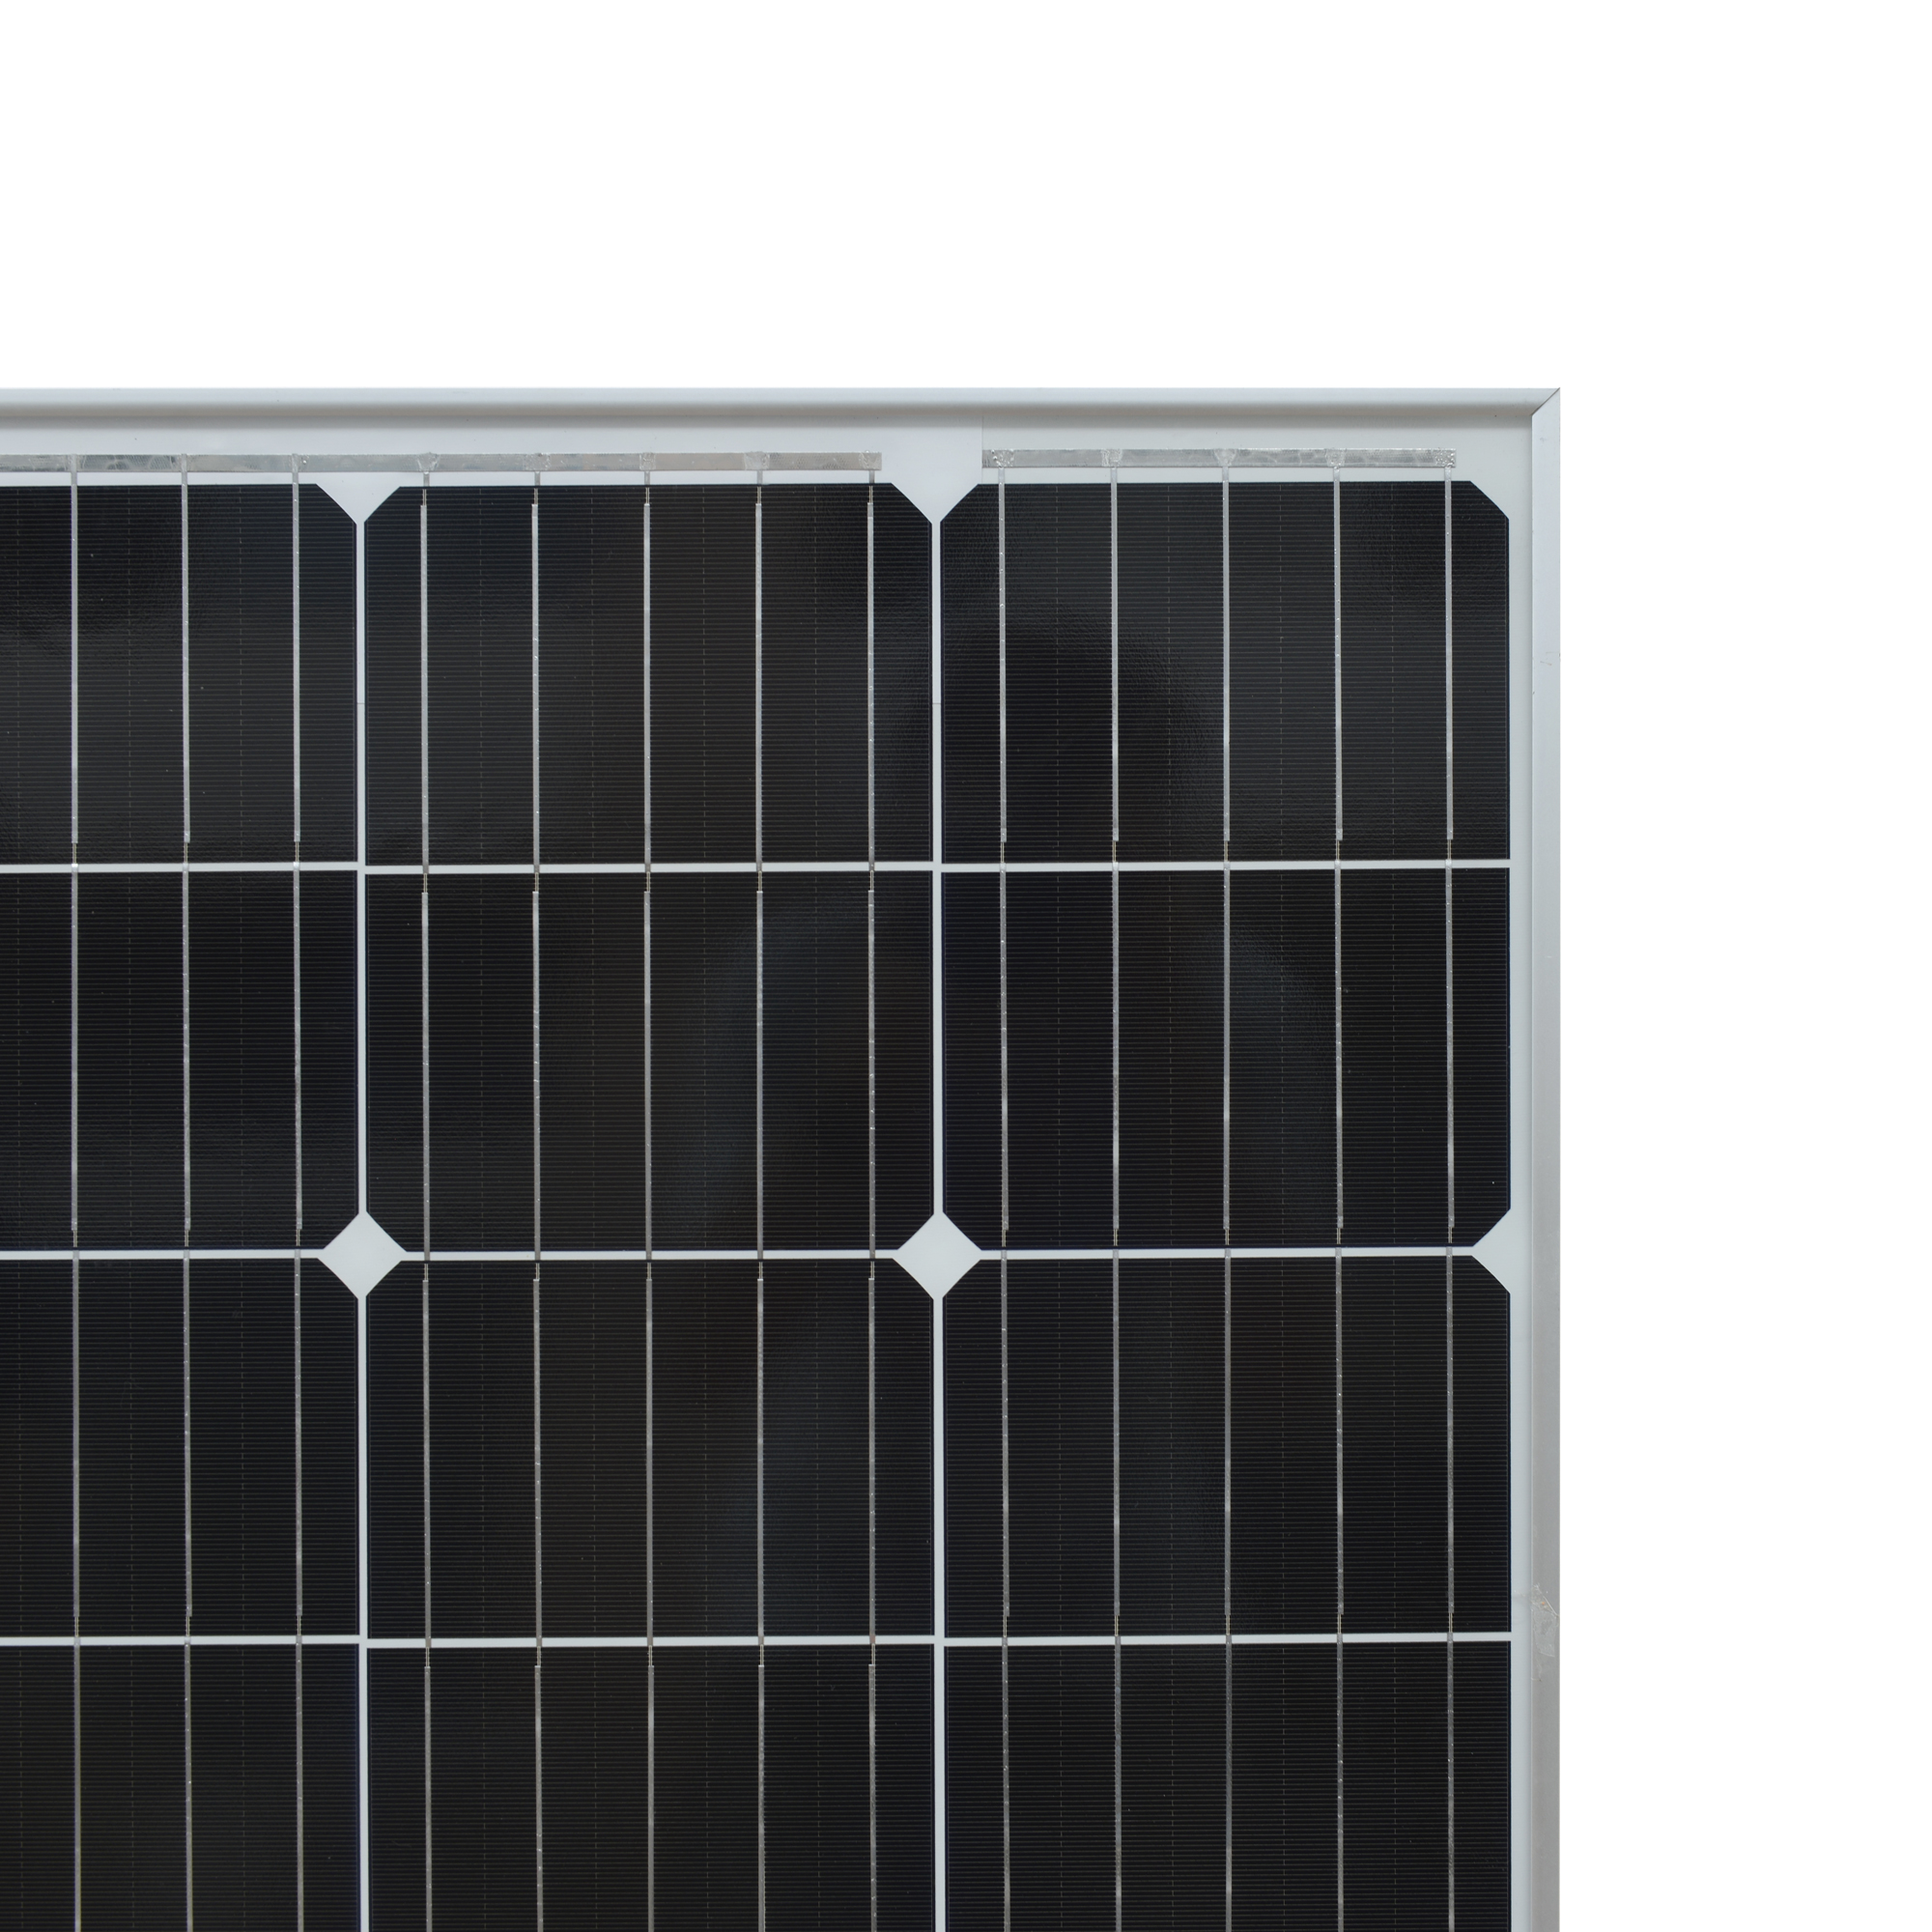 100 watt monocrystalline solar panel for home use